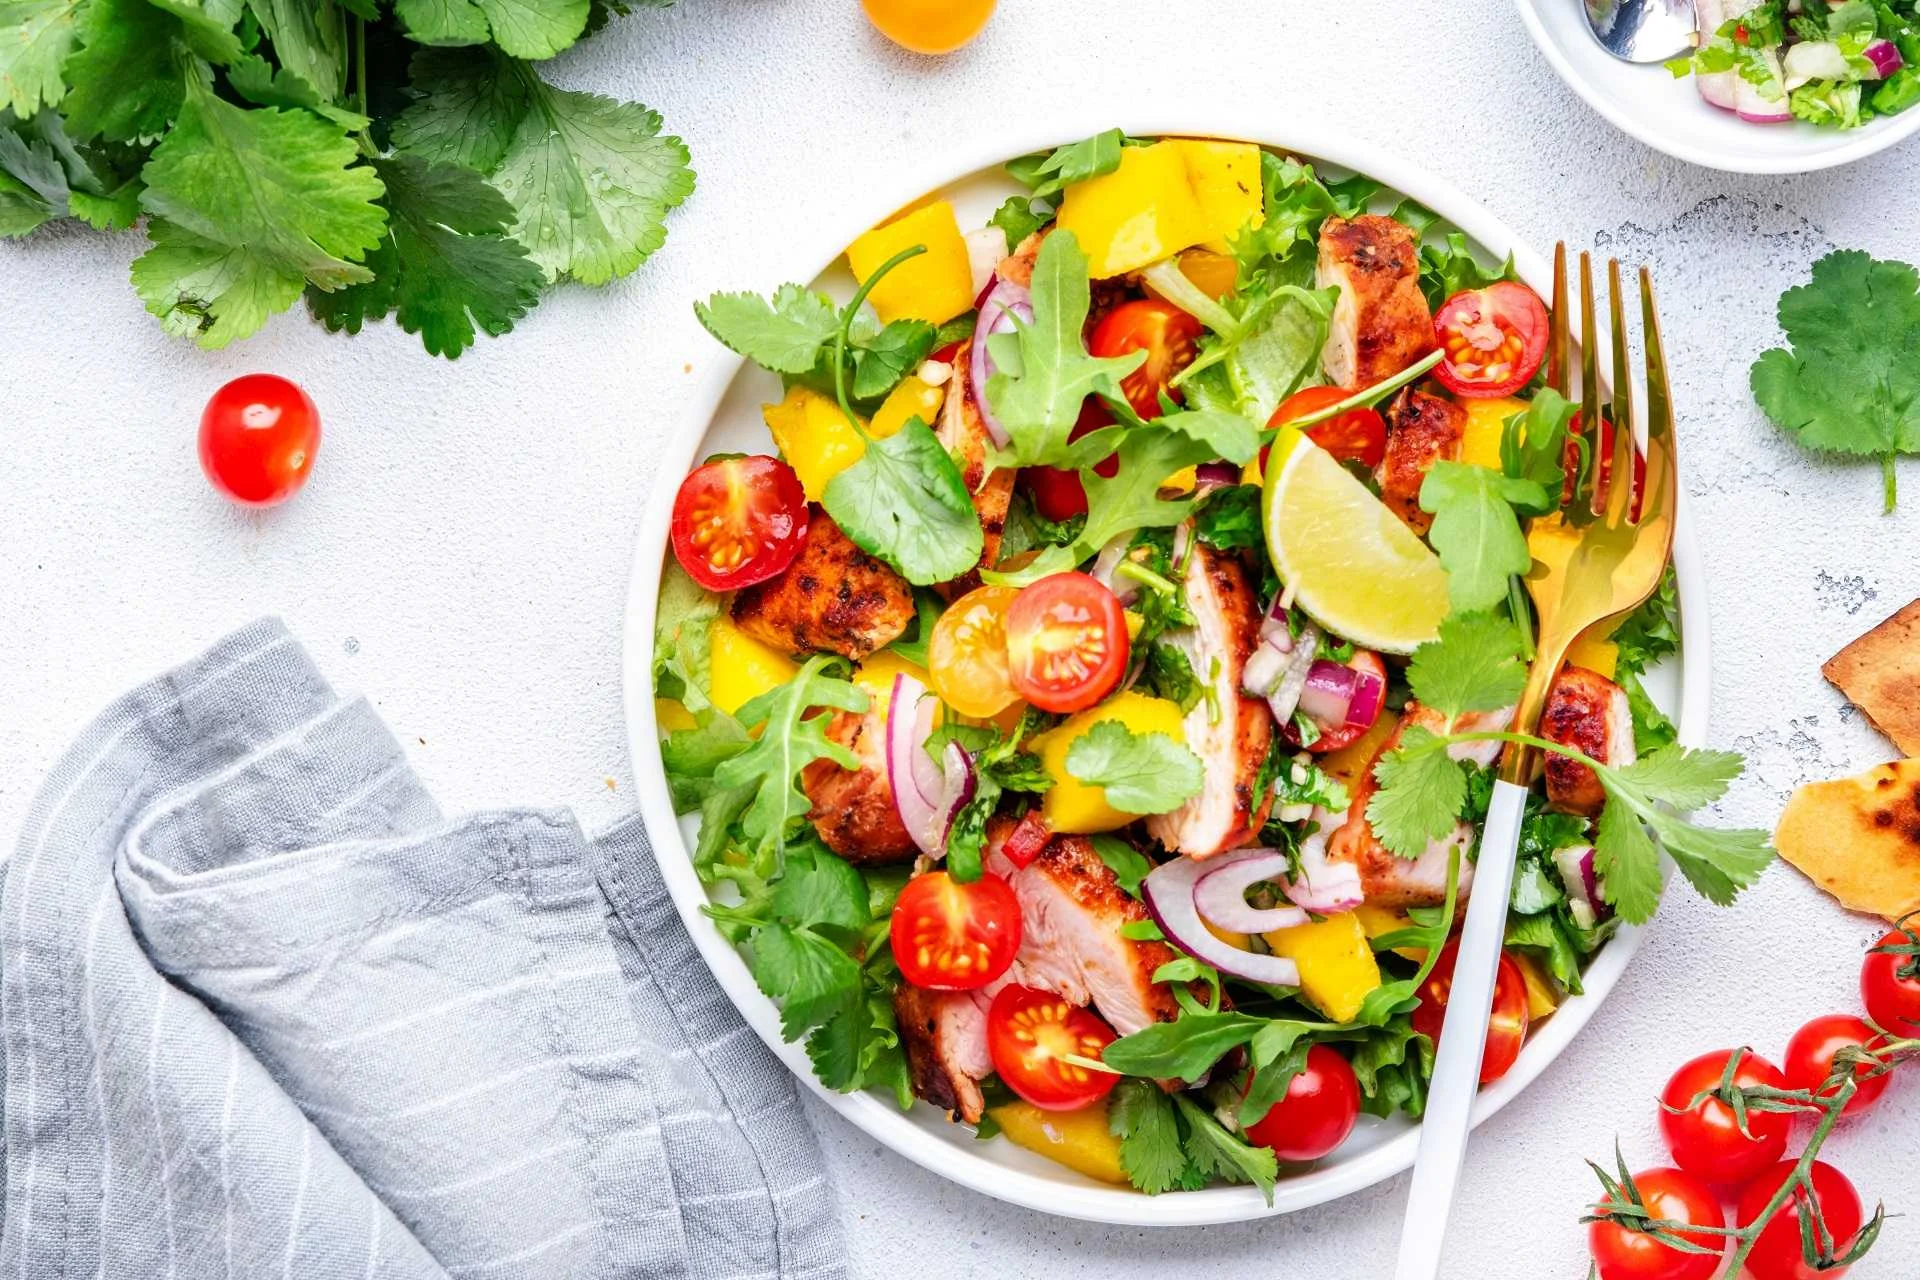 Eco Tropical Fruit Based Salad